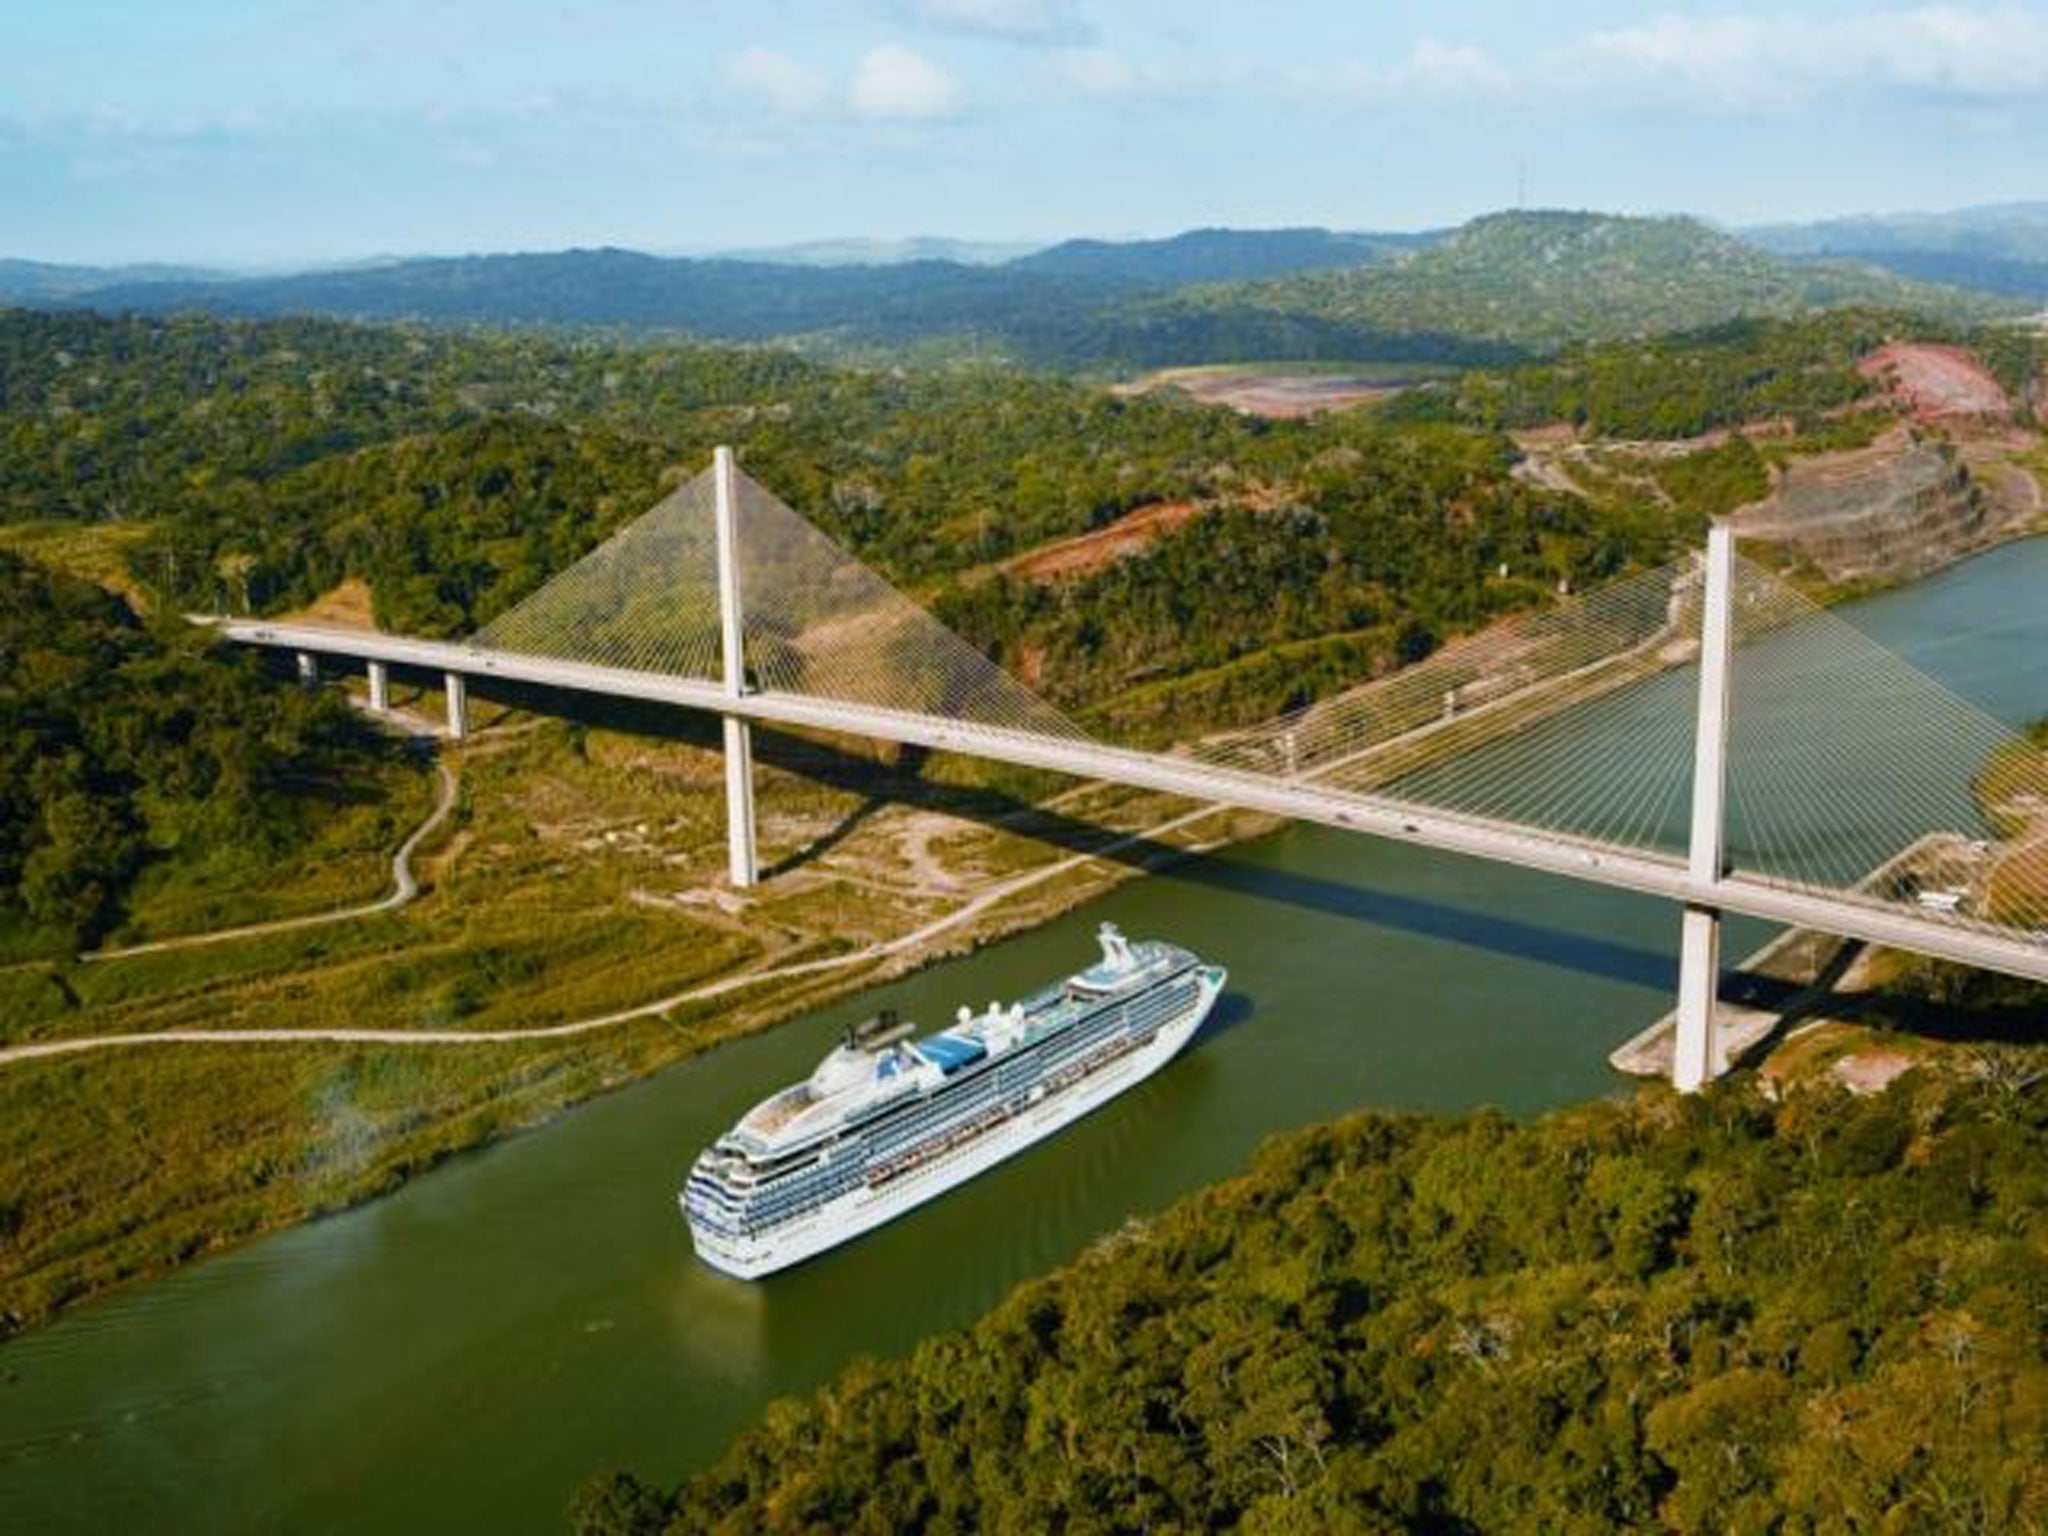 Flow chart: A Princess cruise ship makes its way along the Panama Canal